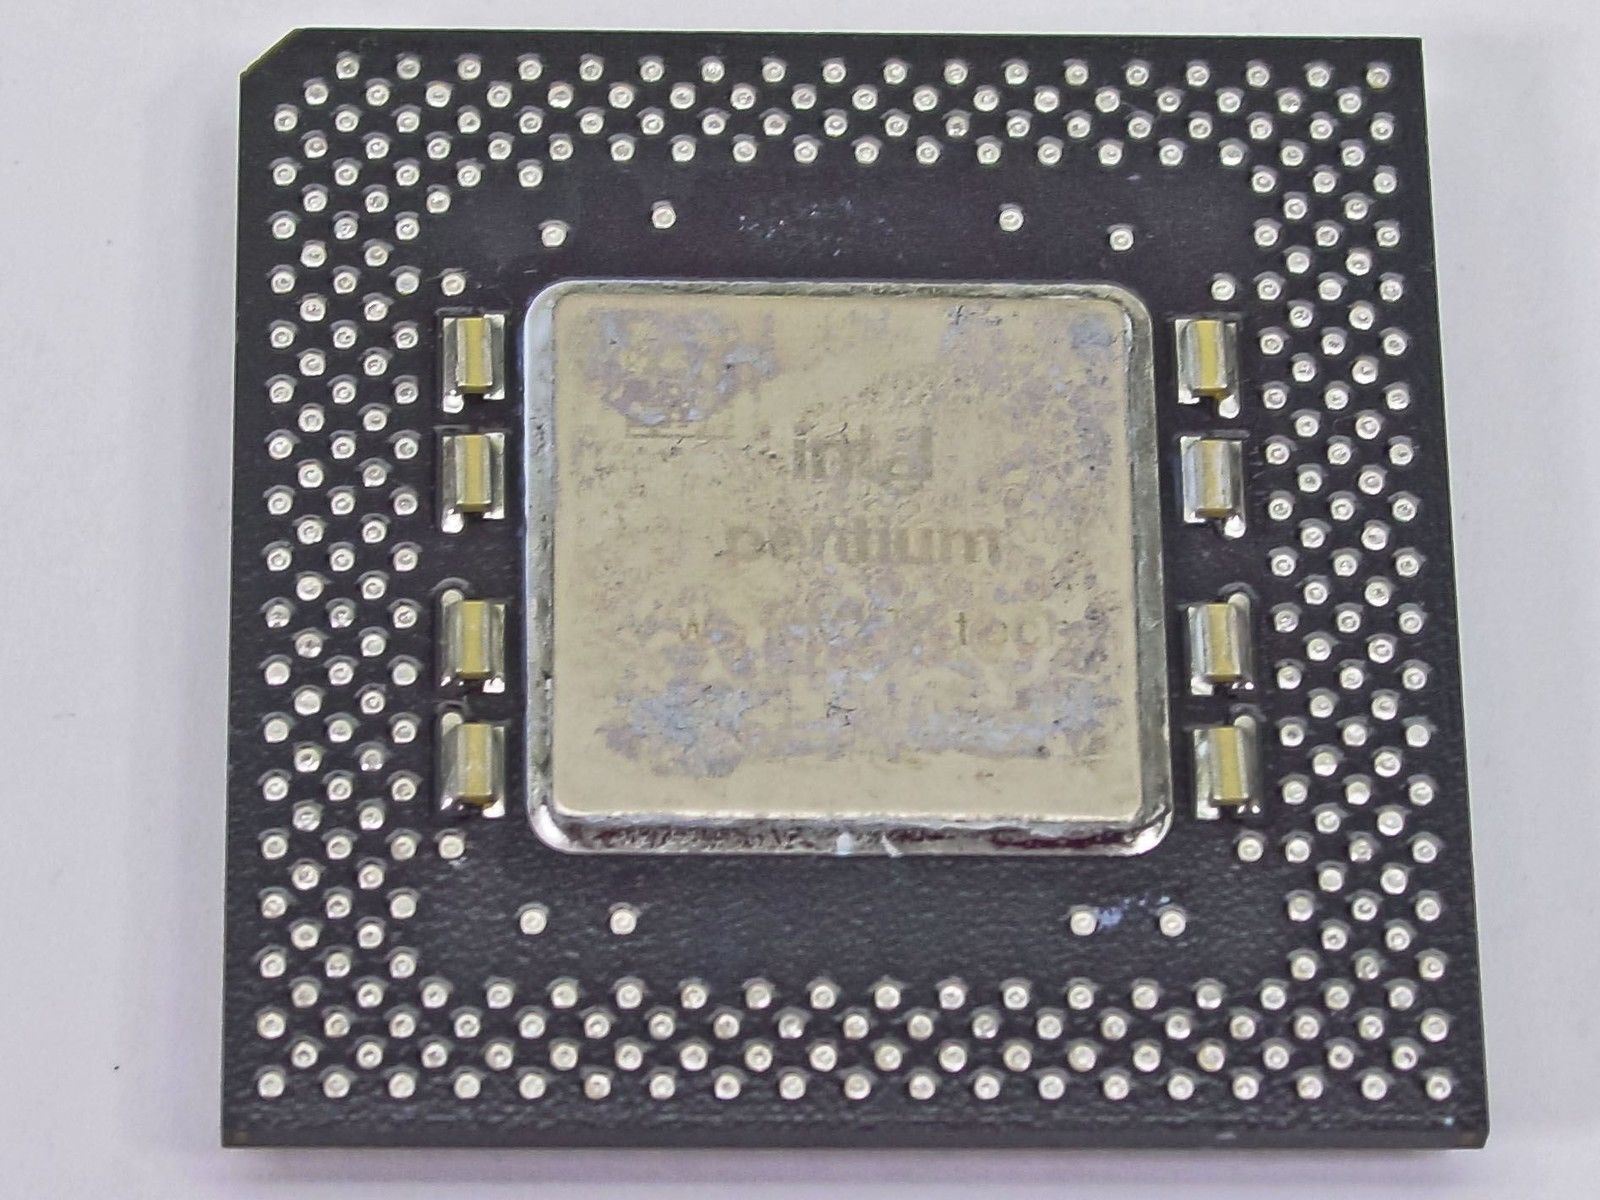 Intel SL27H P1 166Mhz MMX CPU Socket 7 FV80503166 - Pentium I Processor